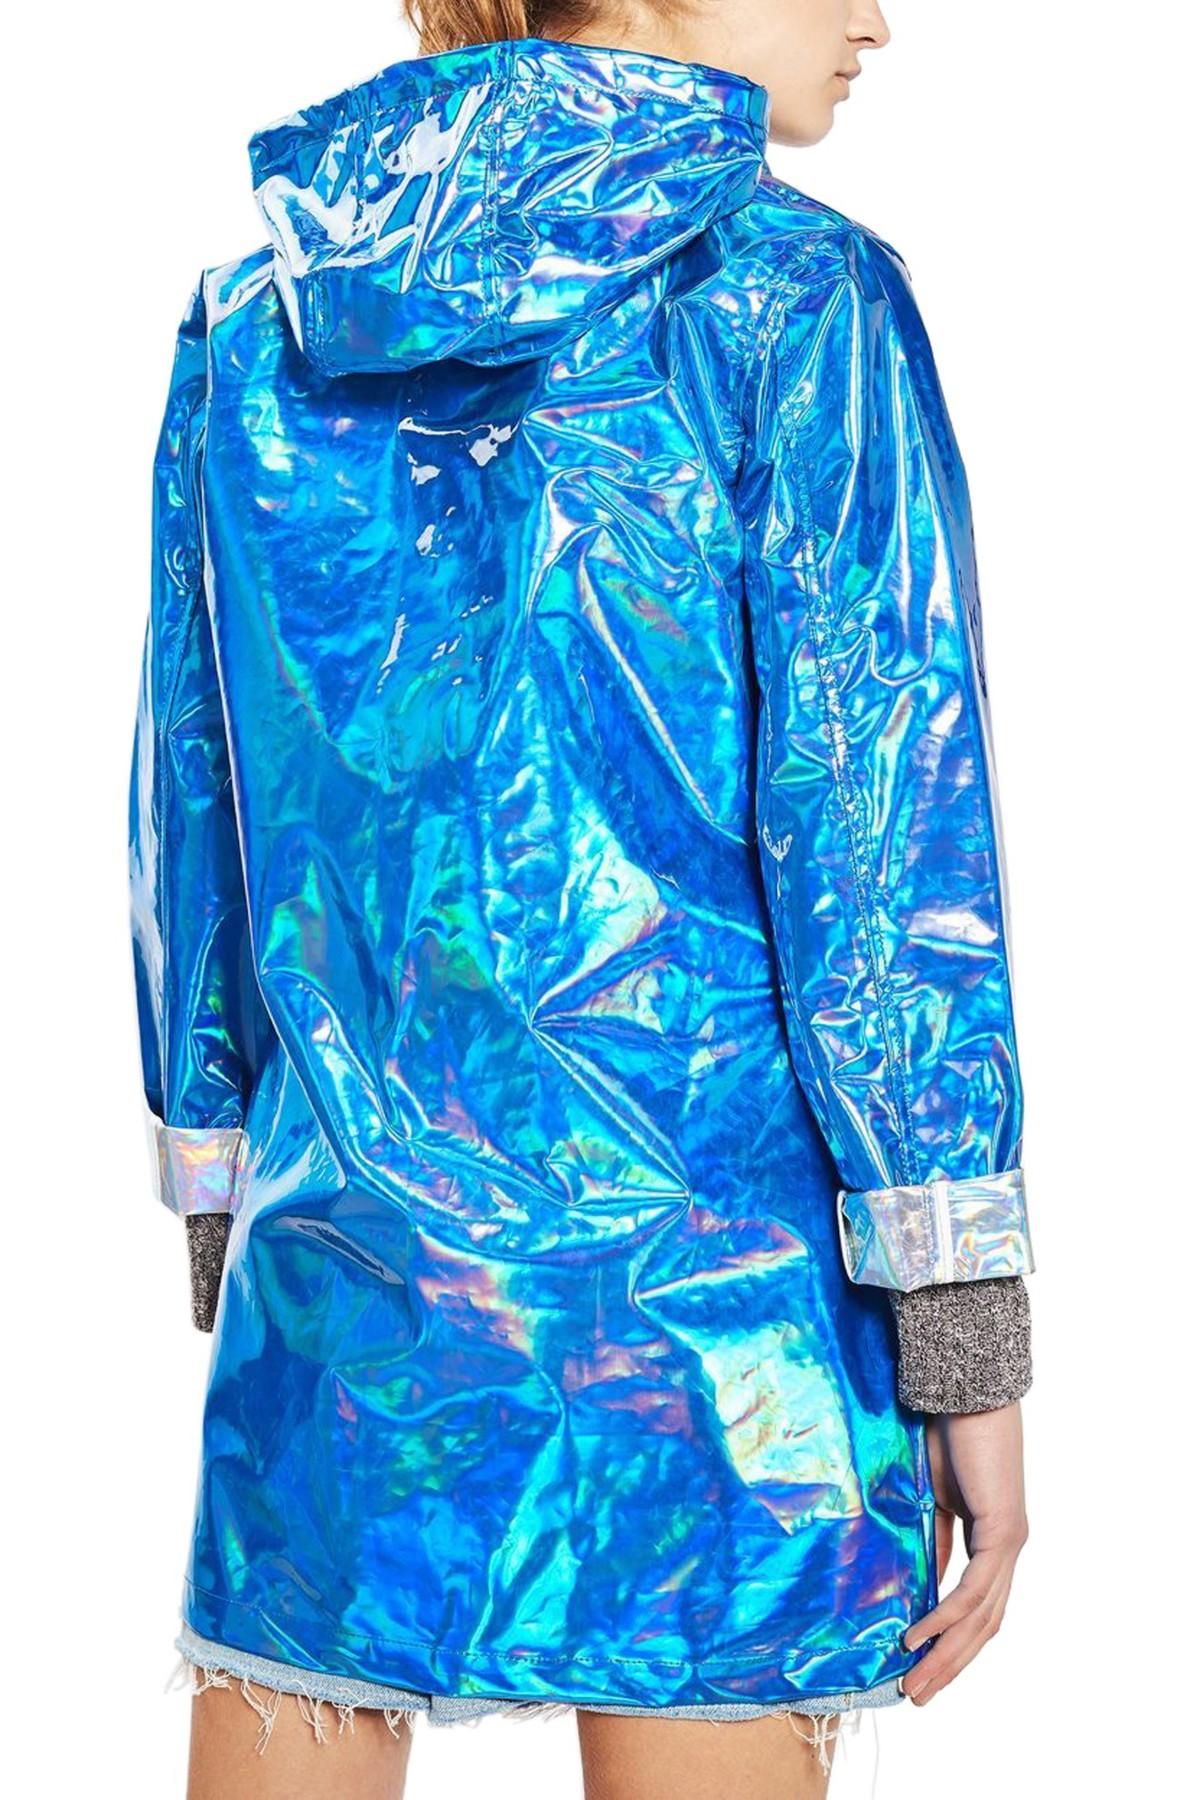 Lyst - Topshop Iridescent Rain Jacket in Blue